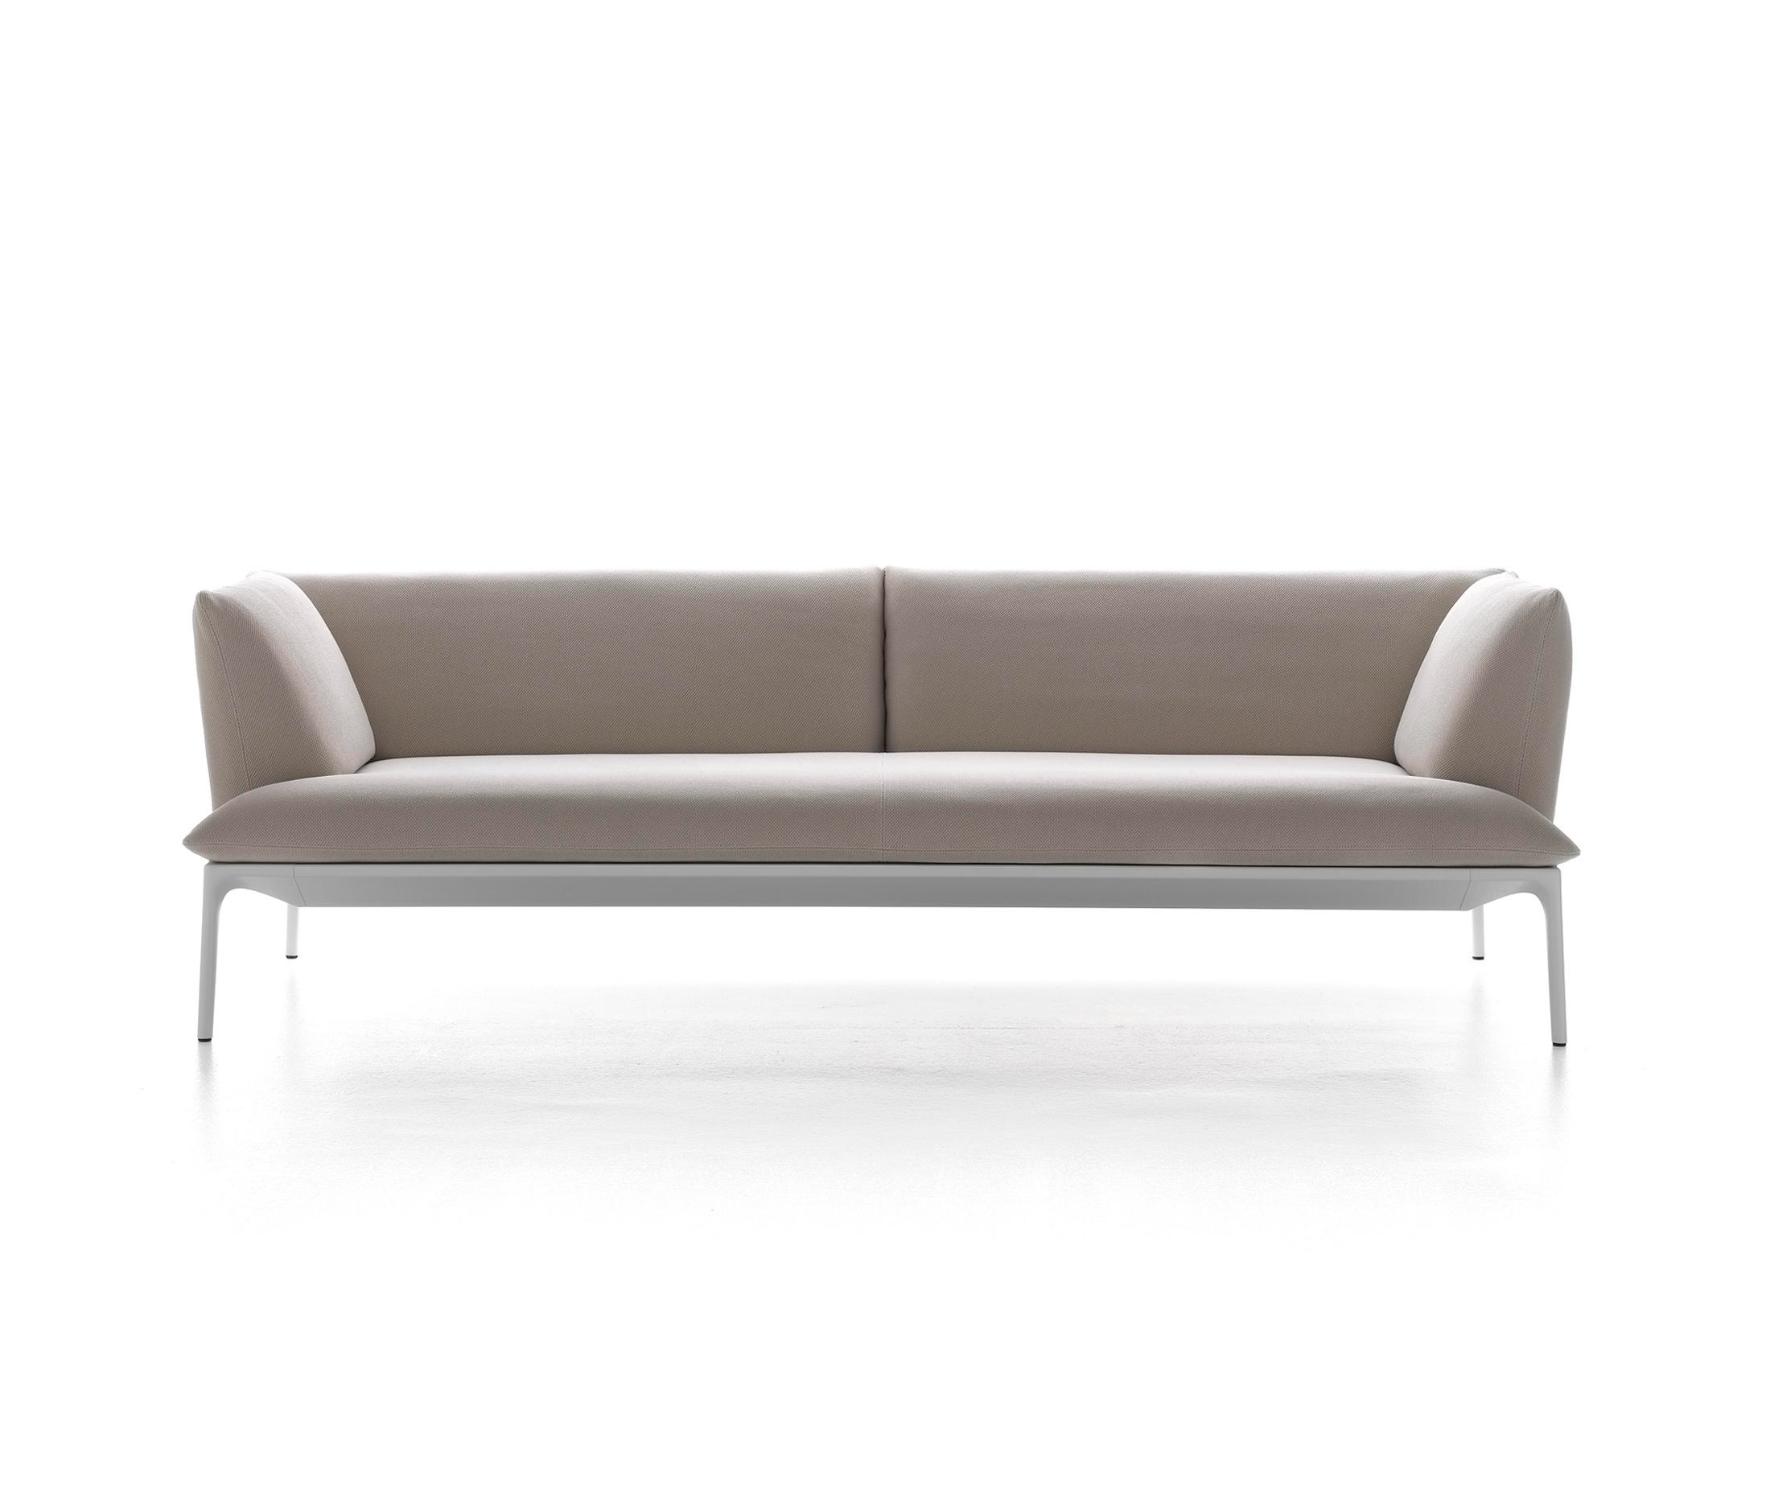 Yale Sofa ☞ Dimensions: Length 160 cm